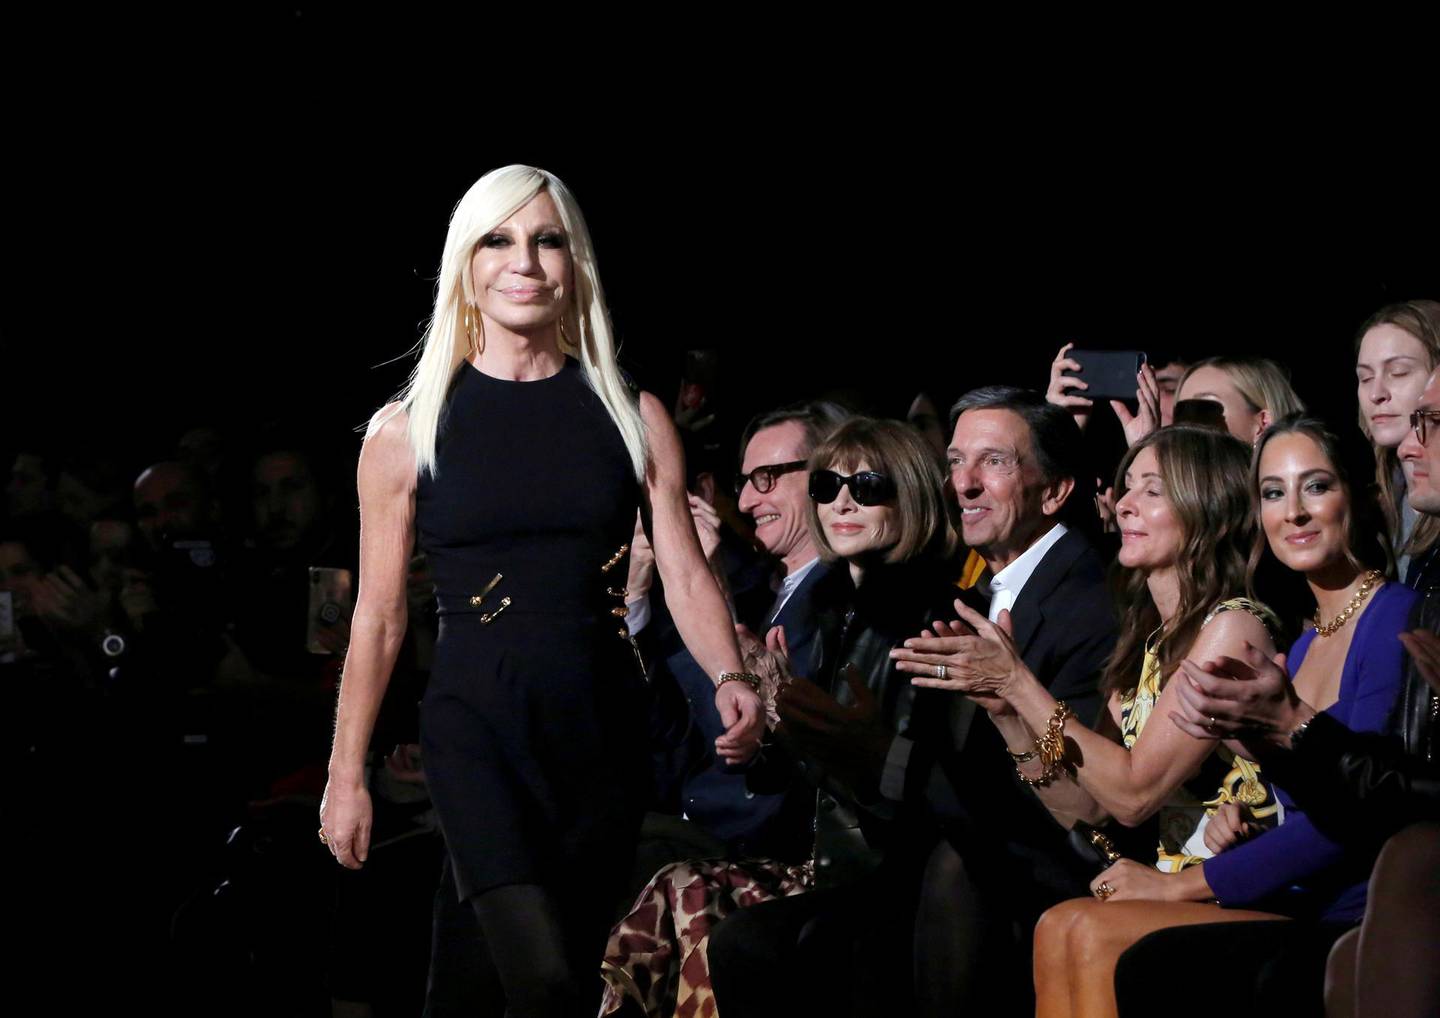 FILE PHOTO: Donatella Versace walks down the catwalk after her Versace presentation in New York, U.S. December 2, 2018. REUTERS/Allison Joyce/File Photo